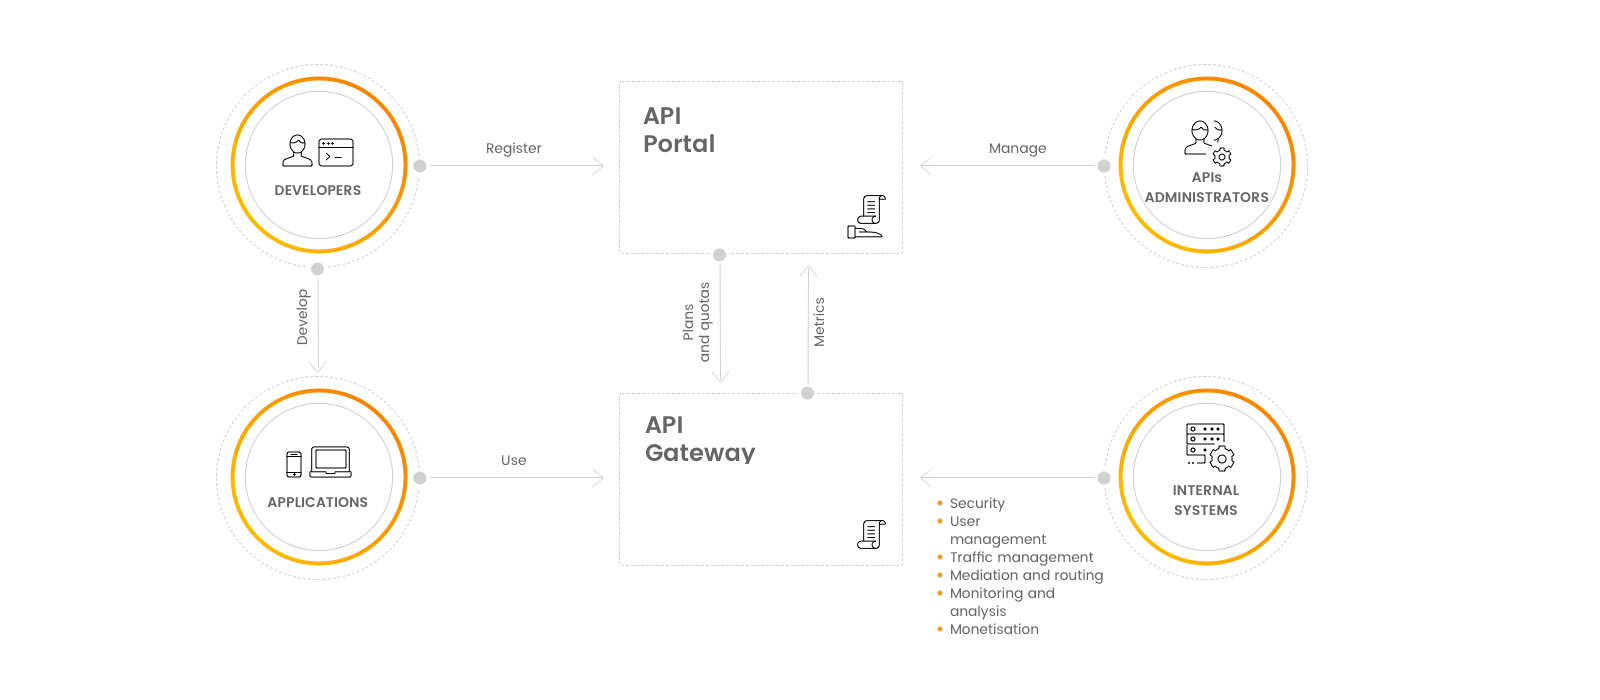 Babel API Management. Summary diagram of the consumption of an API